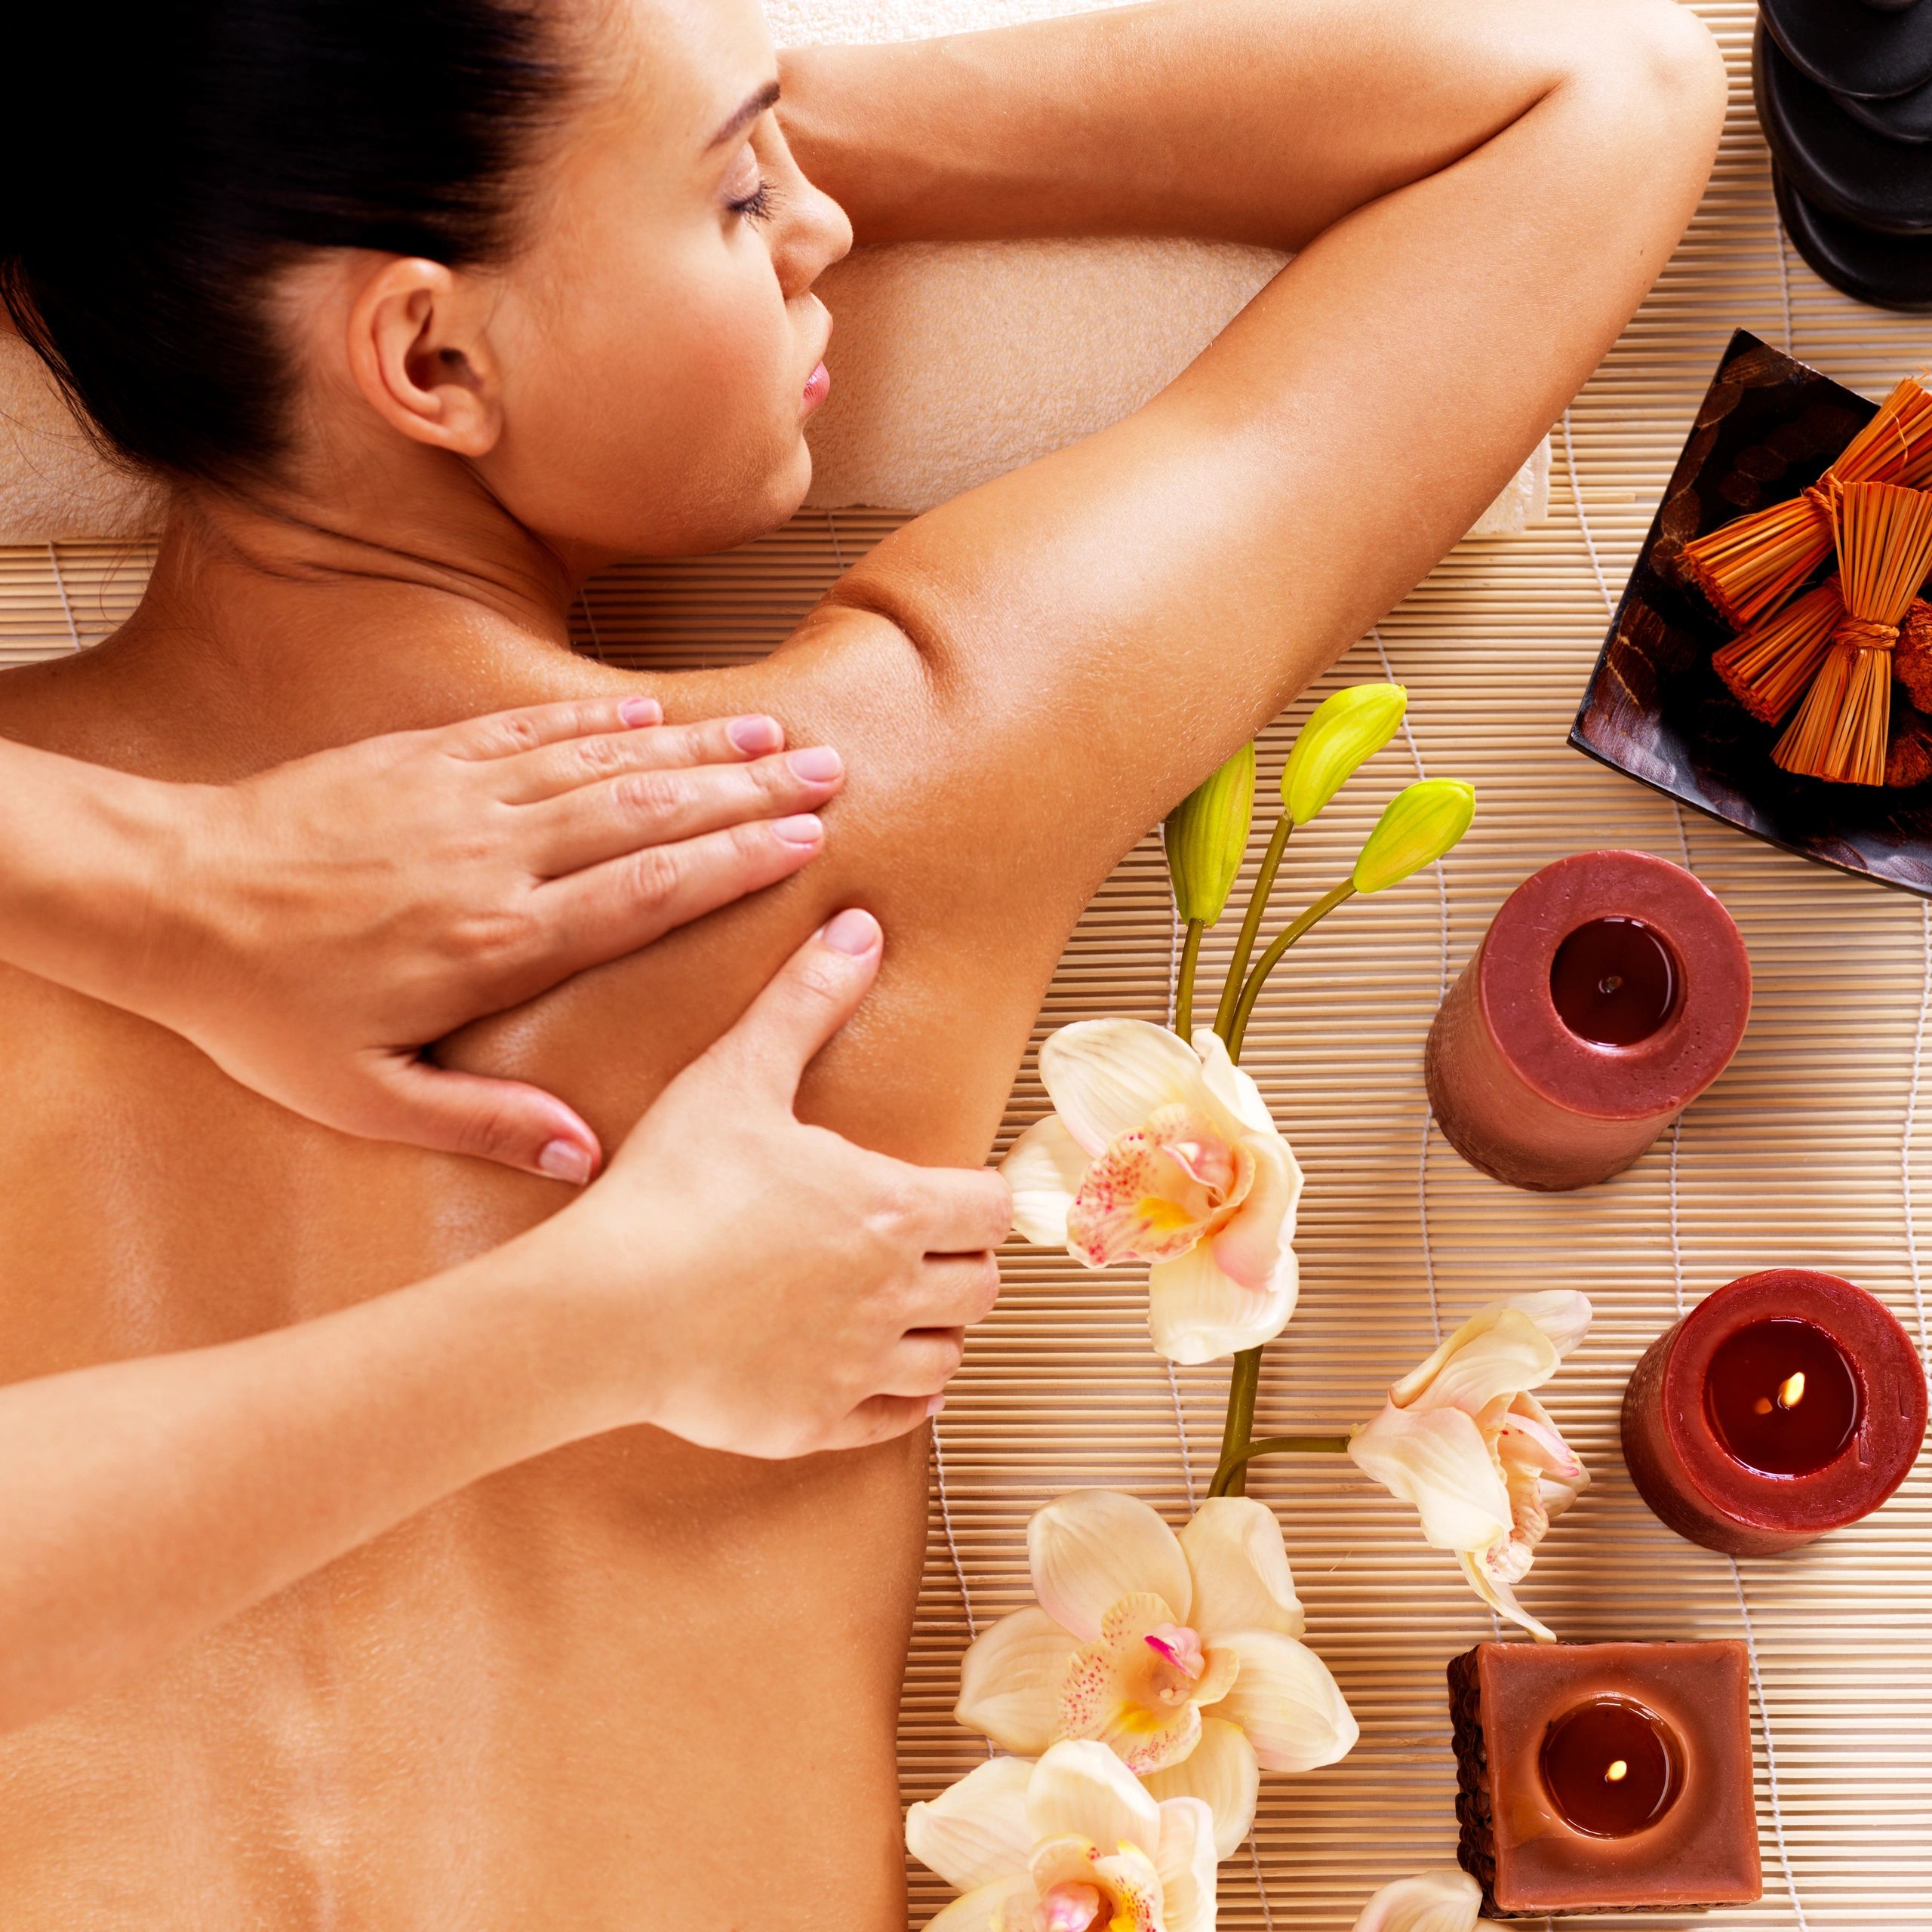 Adult woman in spa salon having relaxing body massage.
